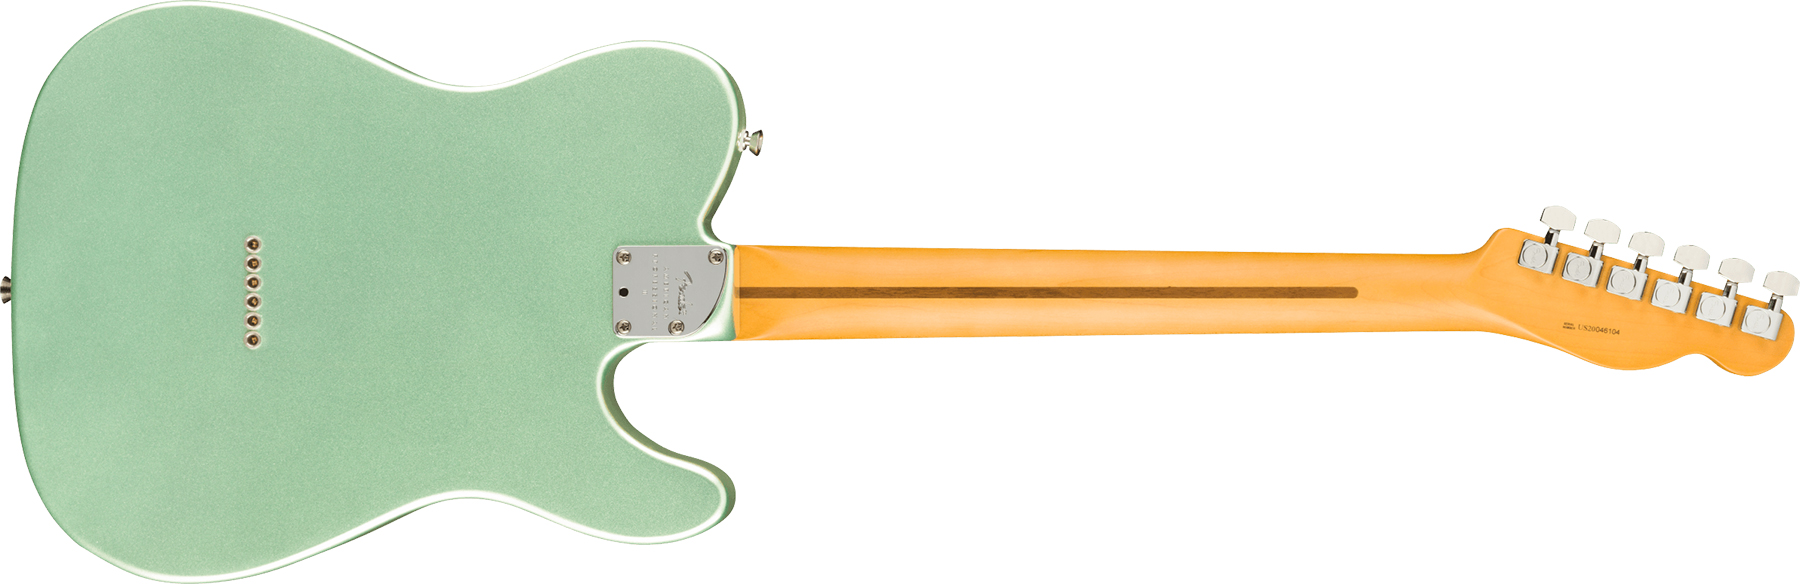 Fender Tele American Professional Ii Lh Gaucher Usa Mn - Mystic Surf Green - Guitarra electrica para zurdos - Variation 1